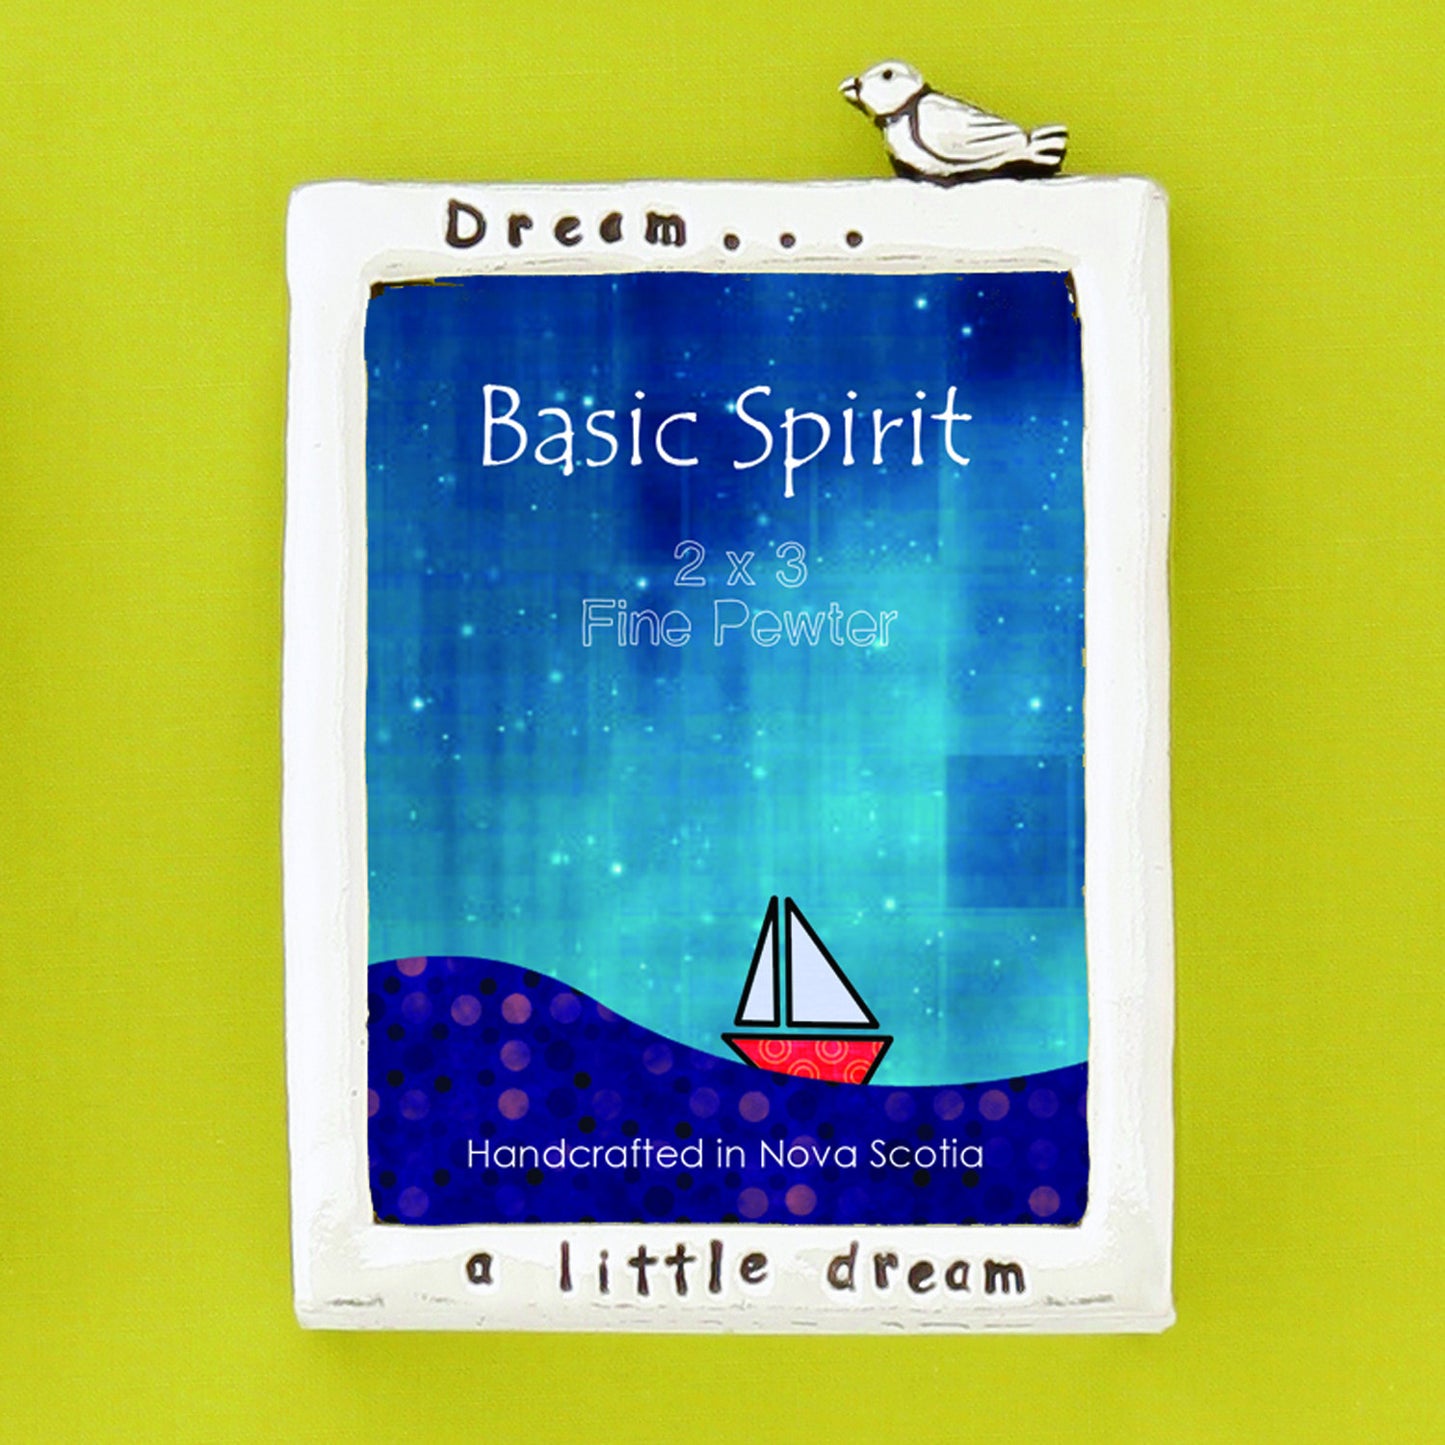 Mini Pewter Picture Frame - "Dream A Little Dream"